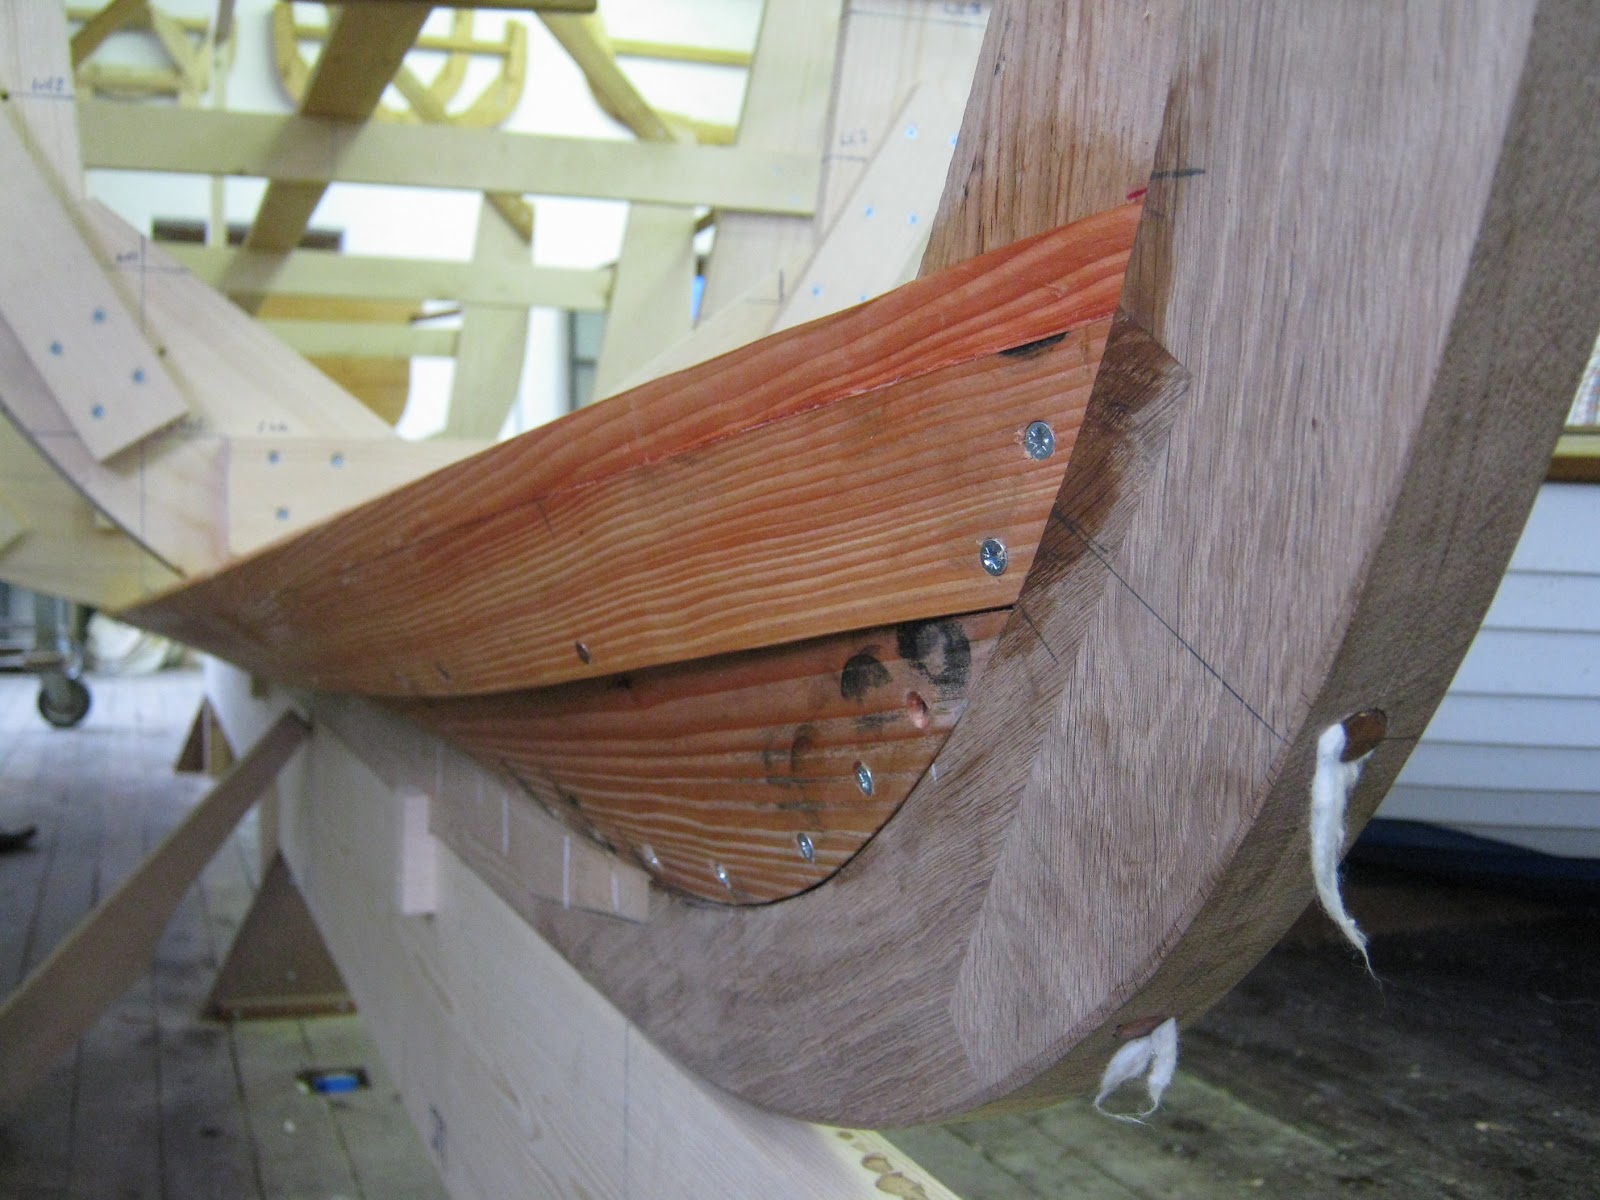 Boat Clinker Boat Building Planking Methods to build modern wooden 